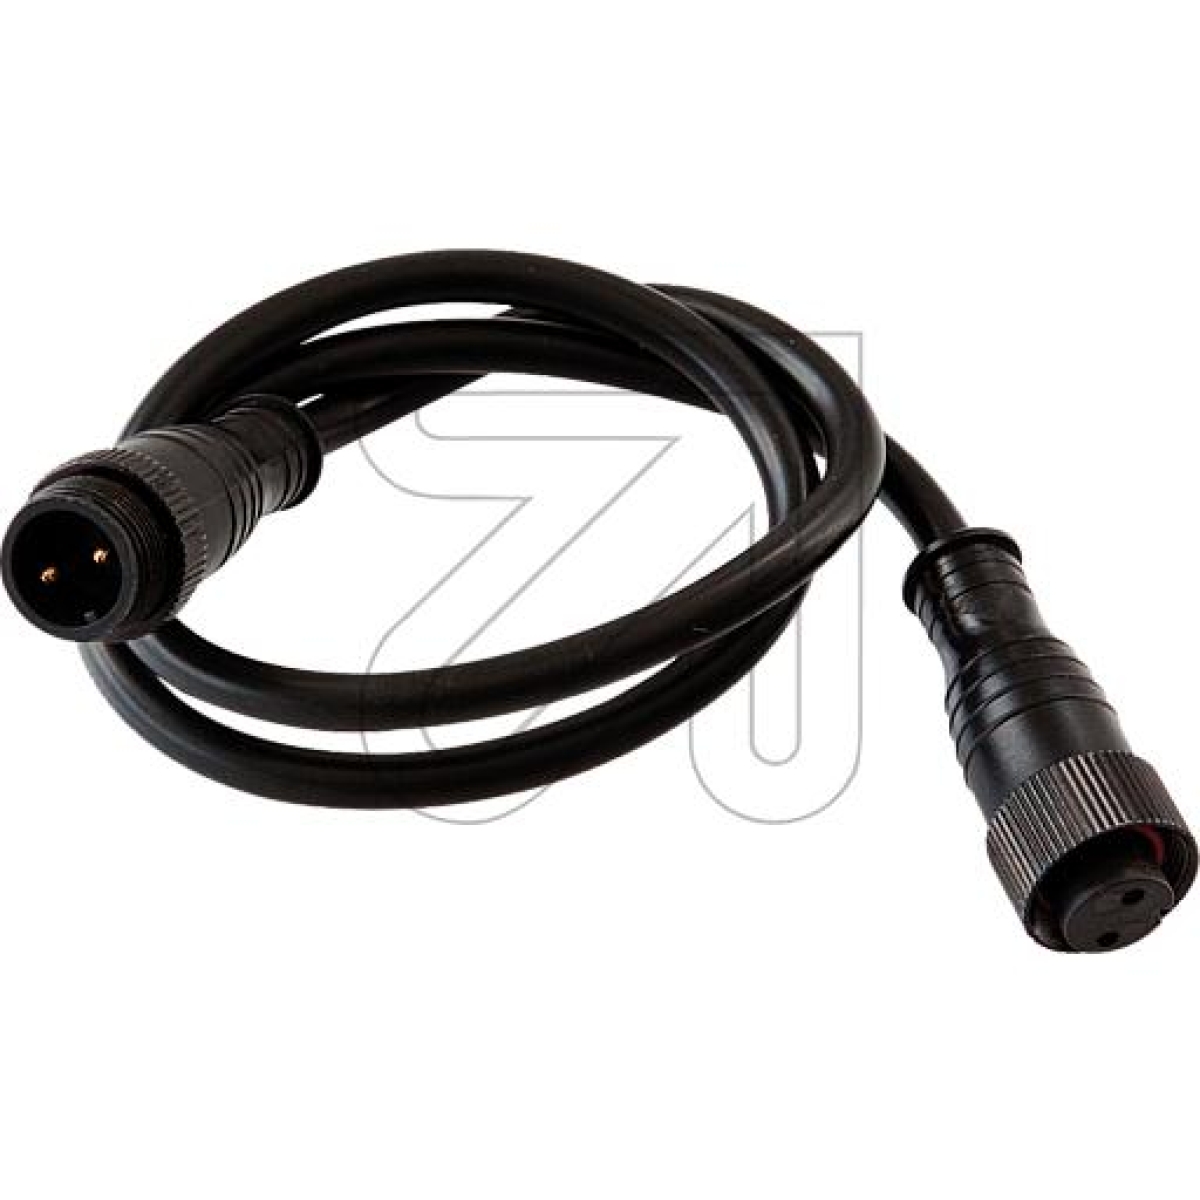 EVNConnection cable 1m P65VBL100UNI to 624380, 624395Article-No: 624390